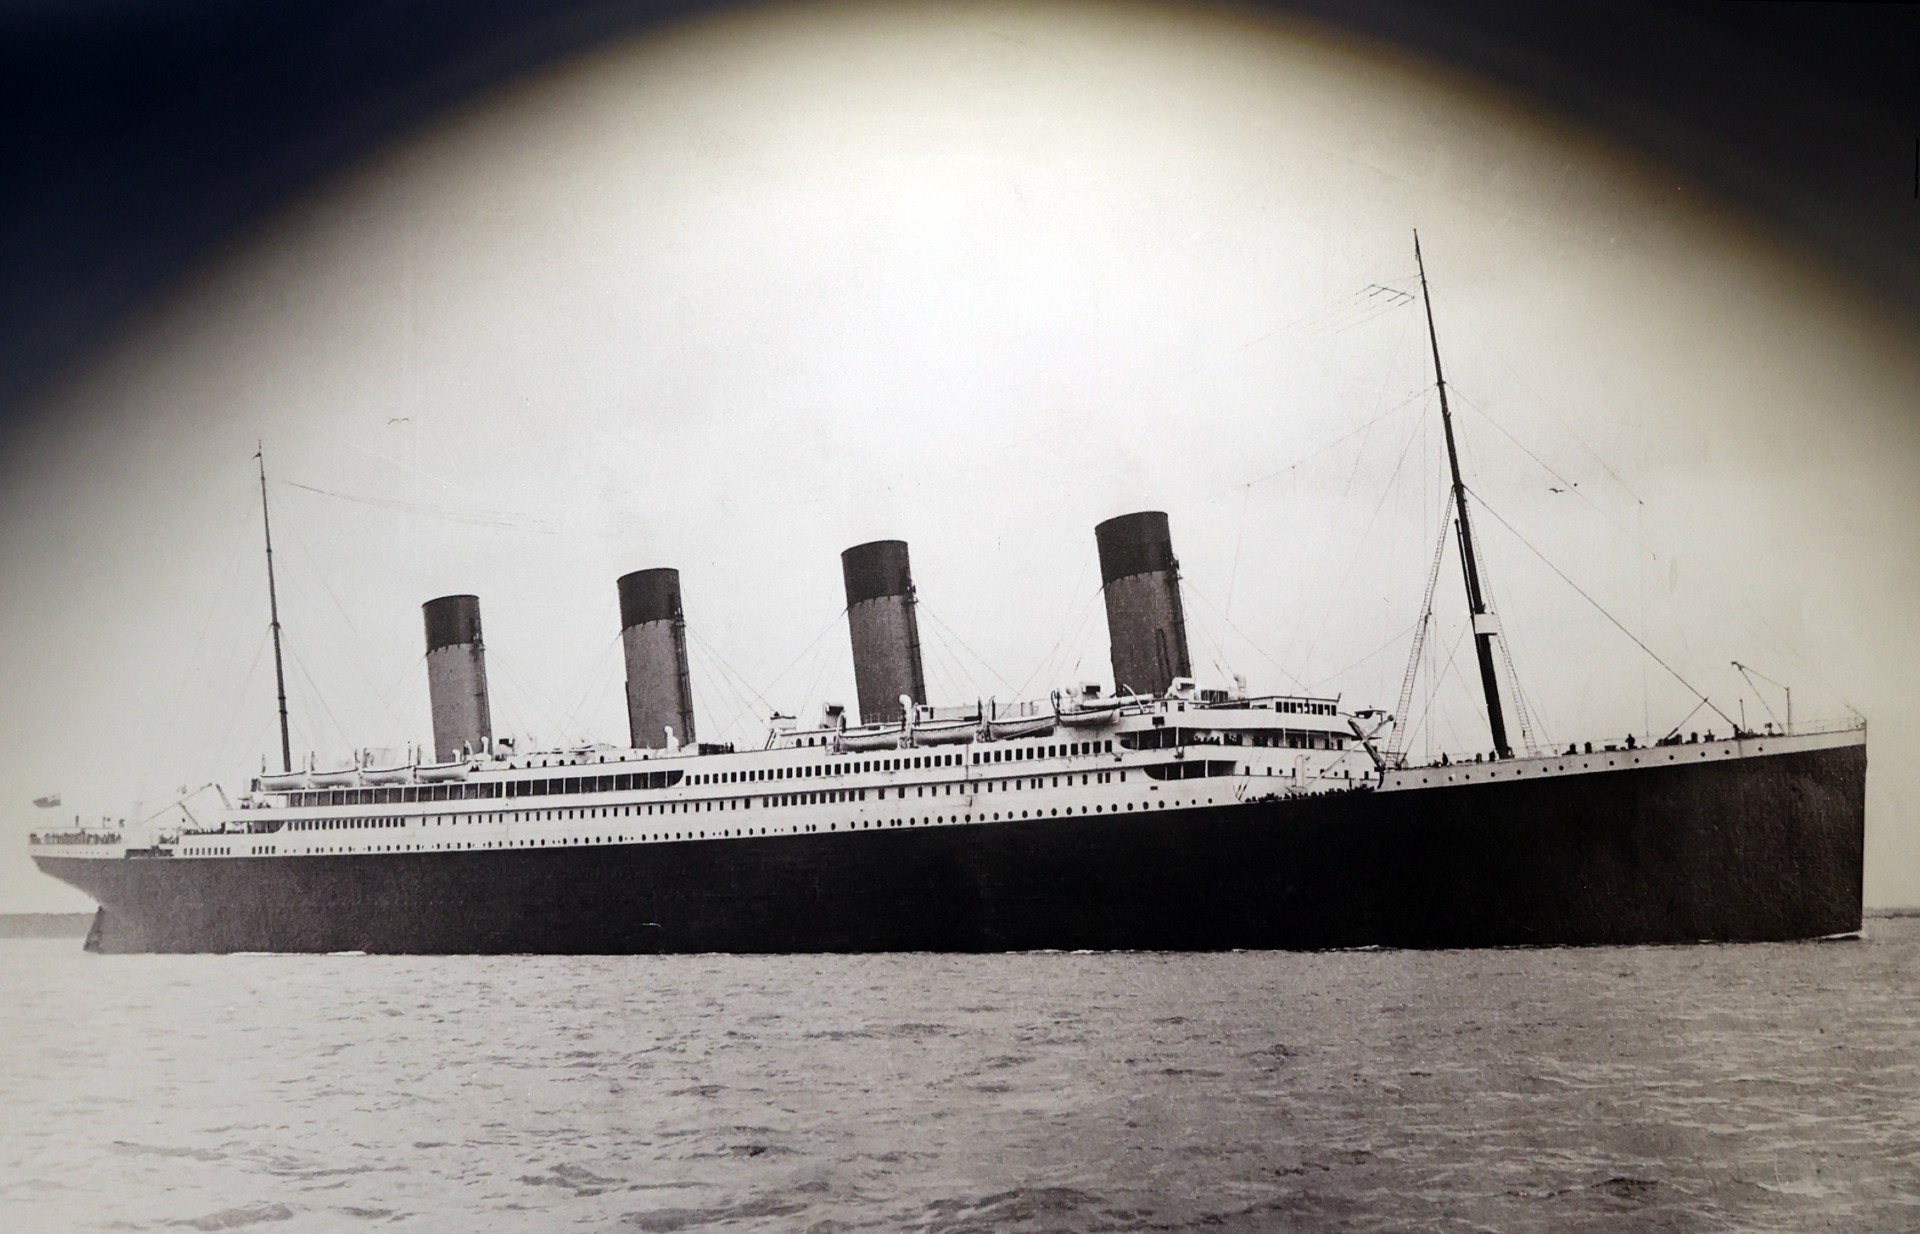 The Titanic ocean liner